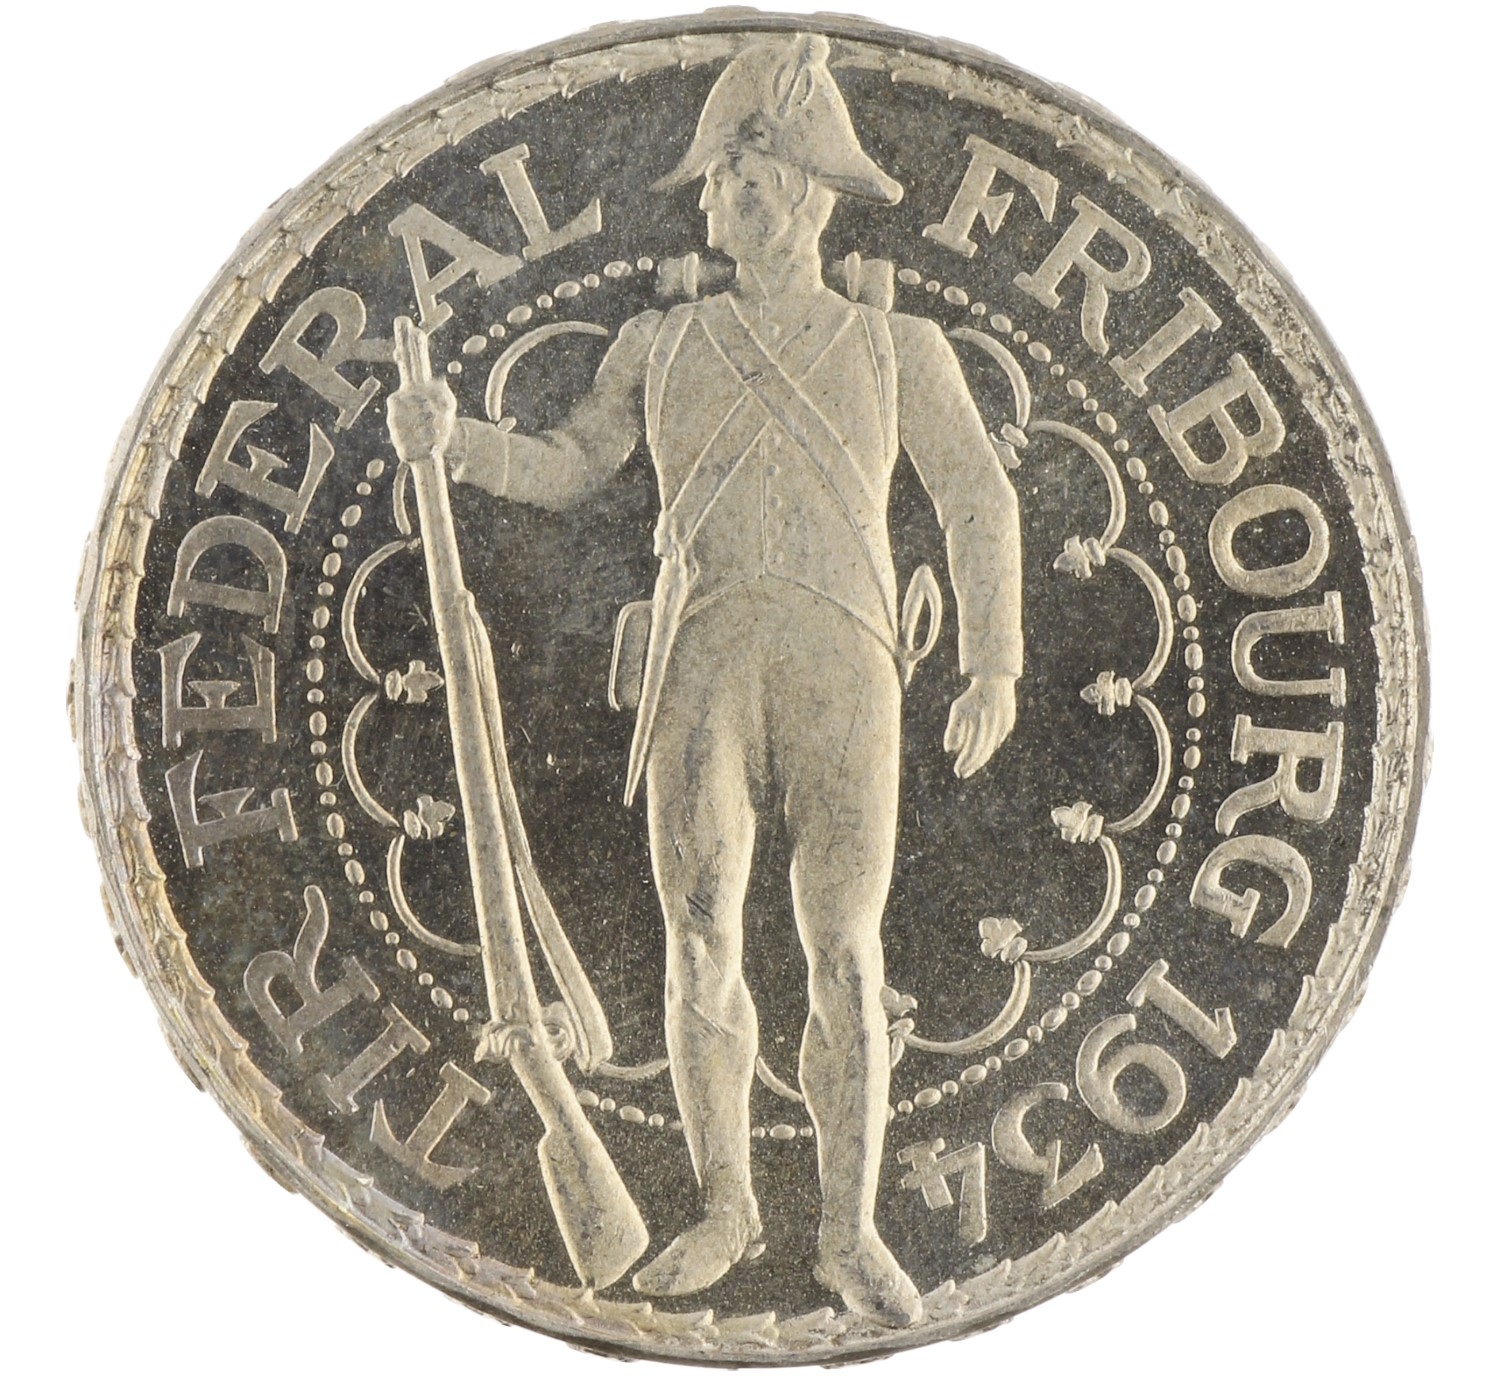 5 Francs - Switzerland - 1934